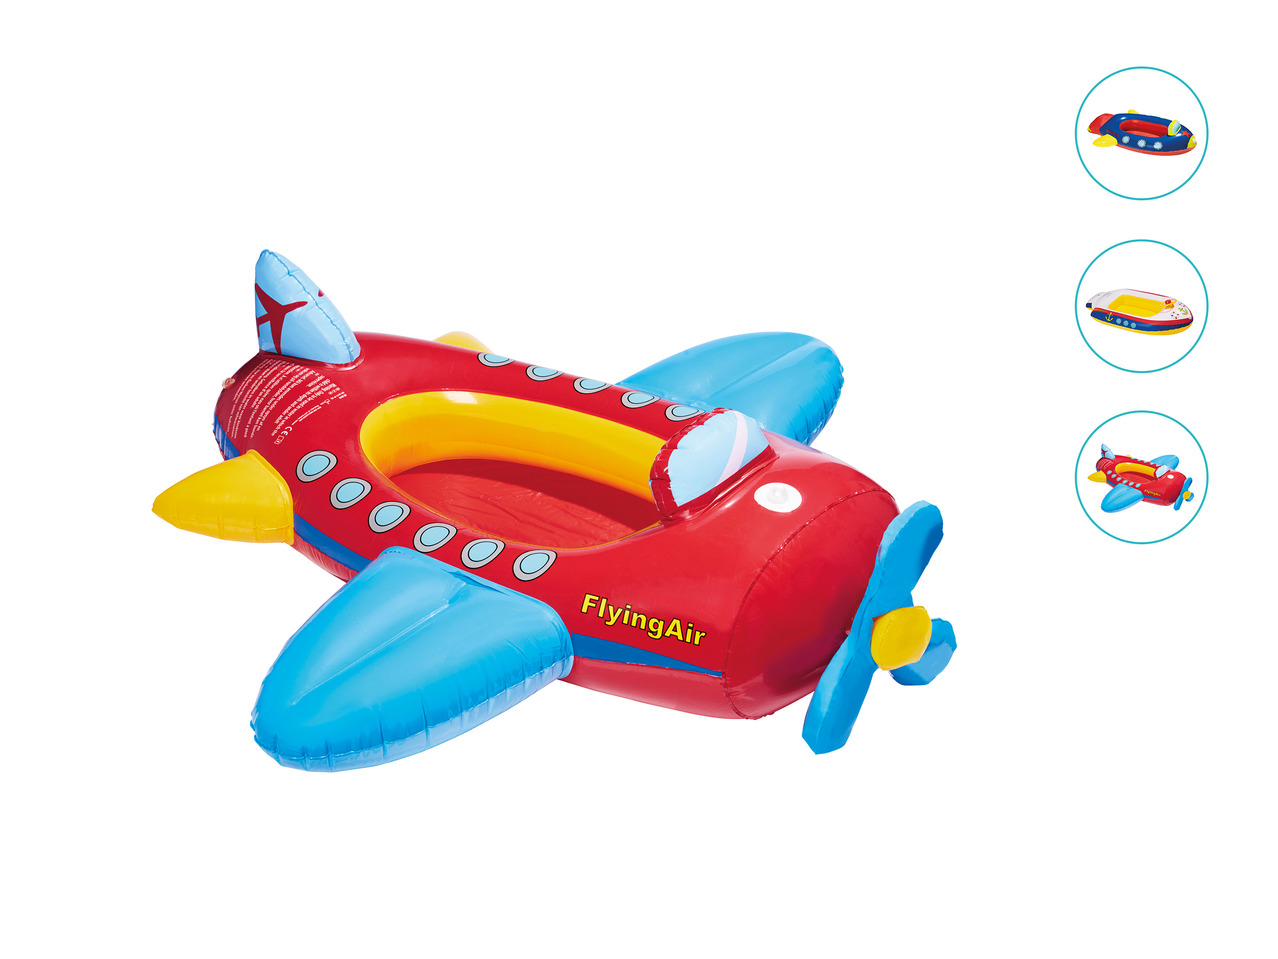 Playtive Junior Inflatable Boat, Aeroplane or Spaceship1